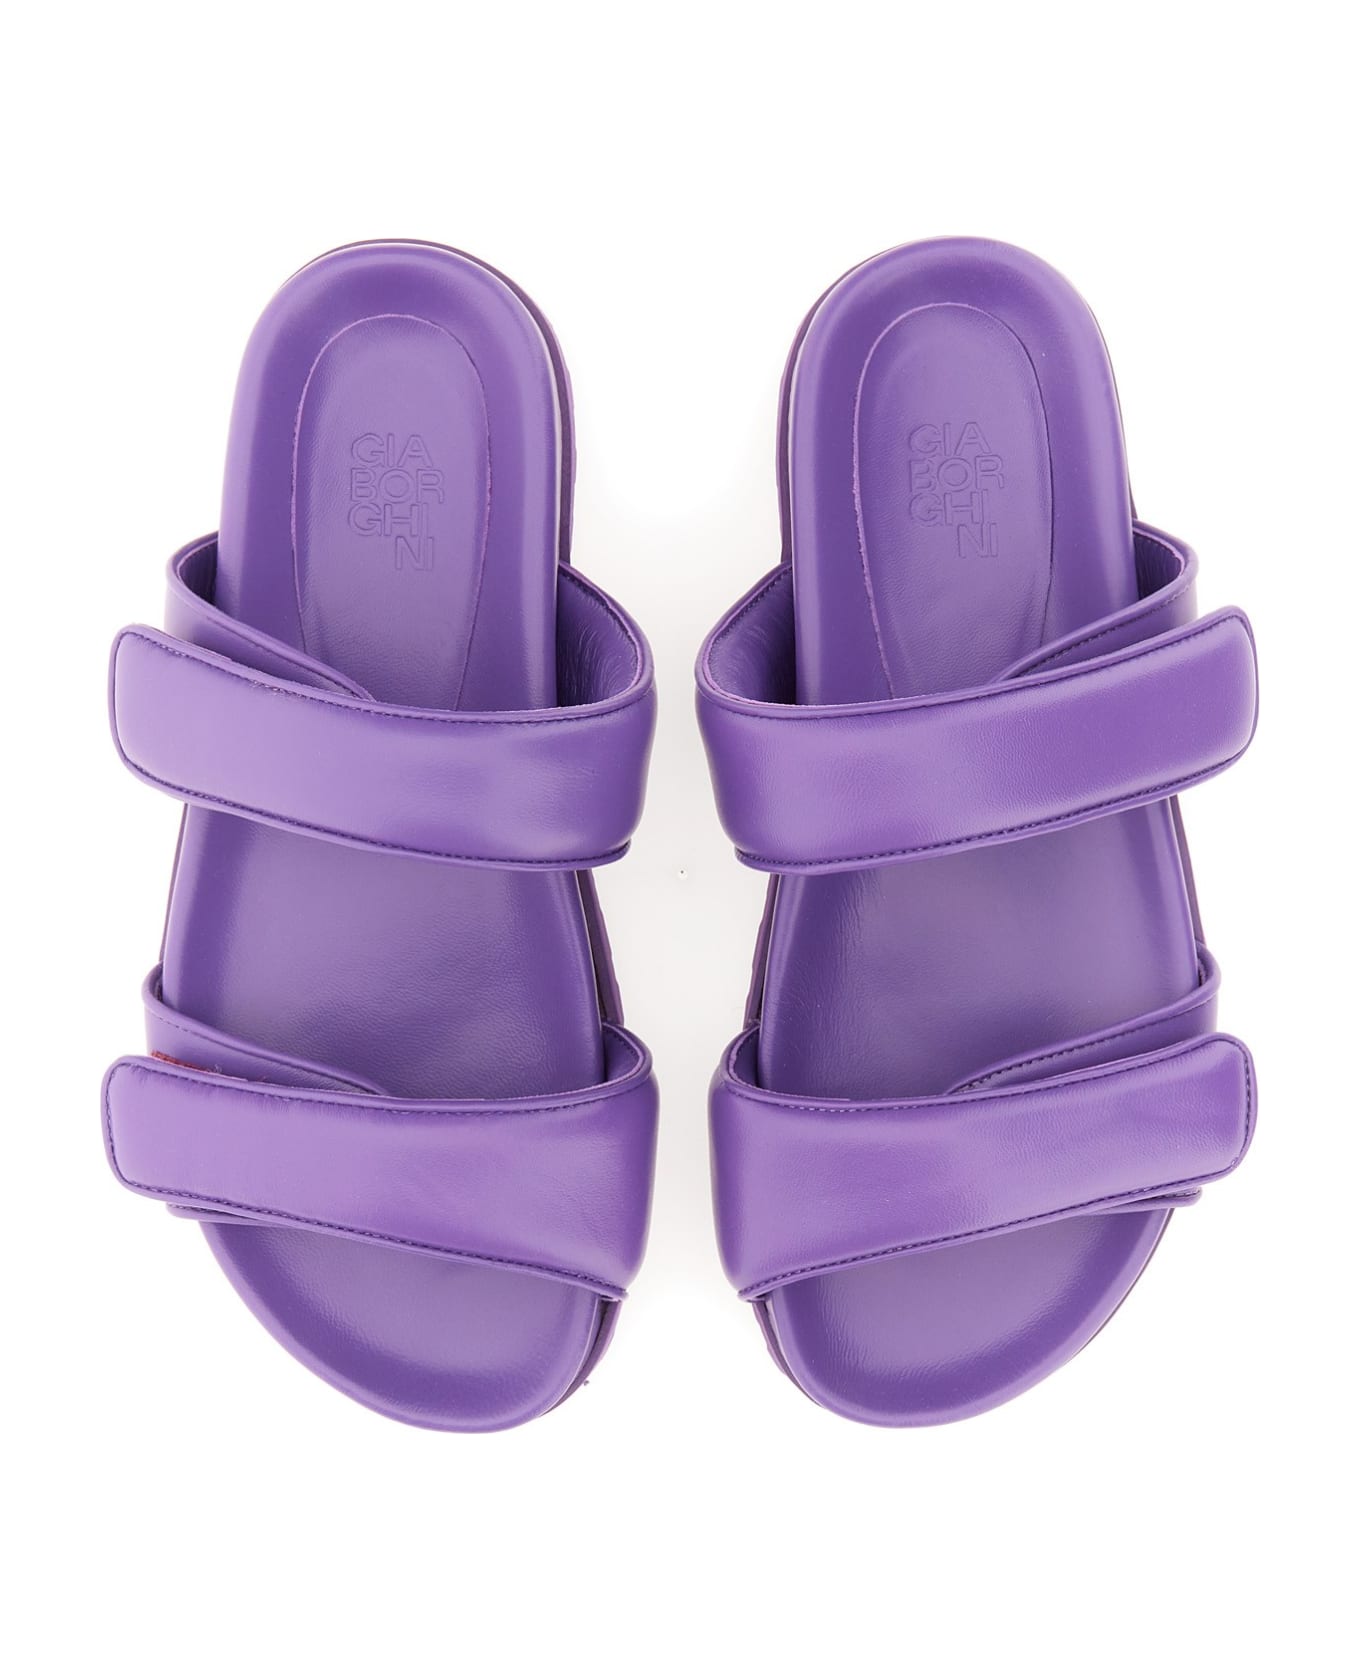 GIA BORGHINI Sandal Perni 11 Gia X Pernille Teisbaek - Purple